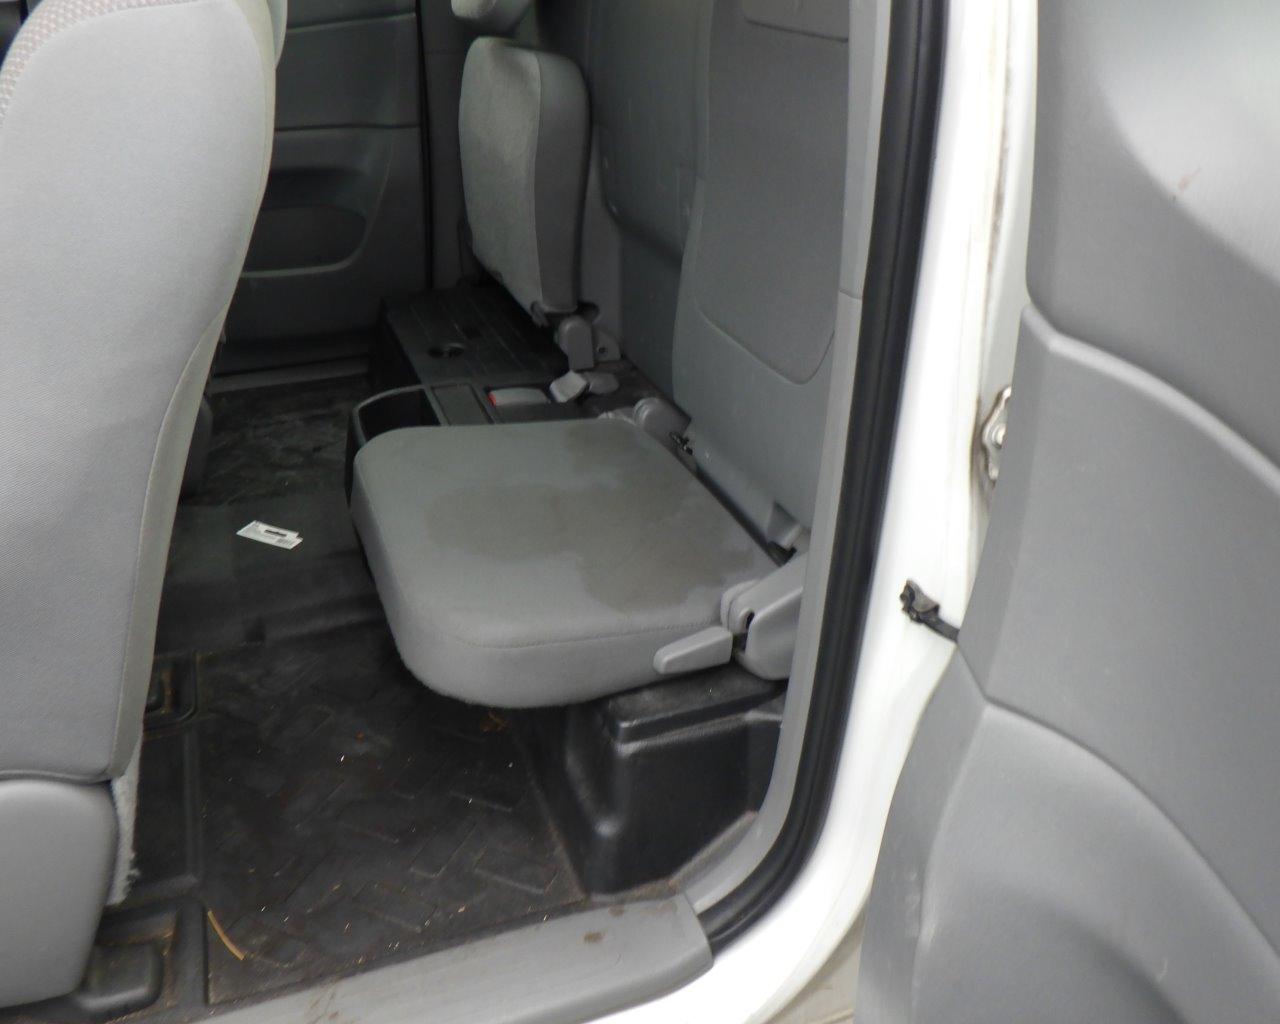 2014 TOYOTA Tacoma Ext Cab w/Tool Box   4x4 (BAD TRANS) s/n:024946